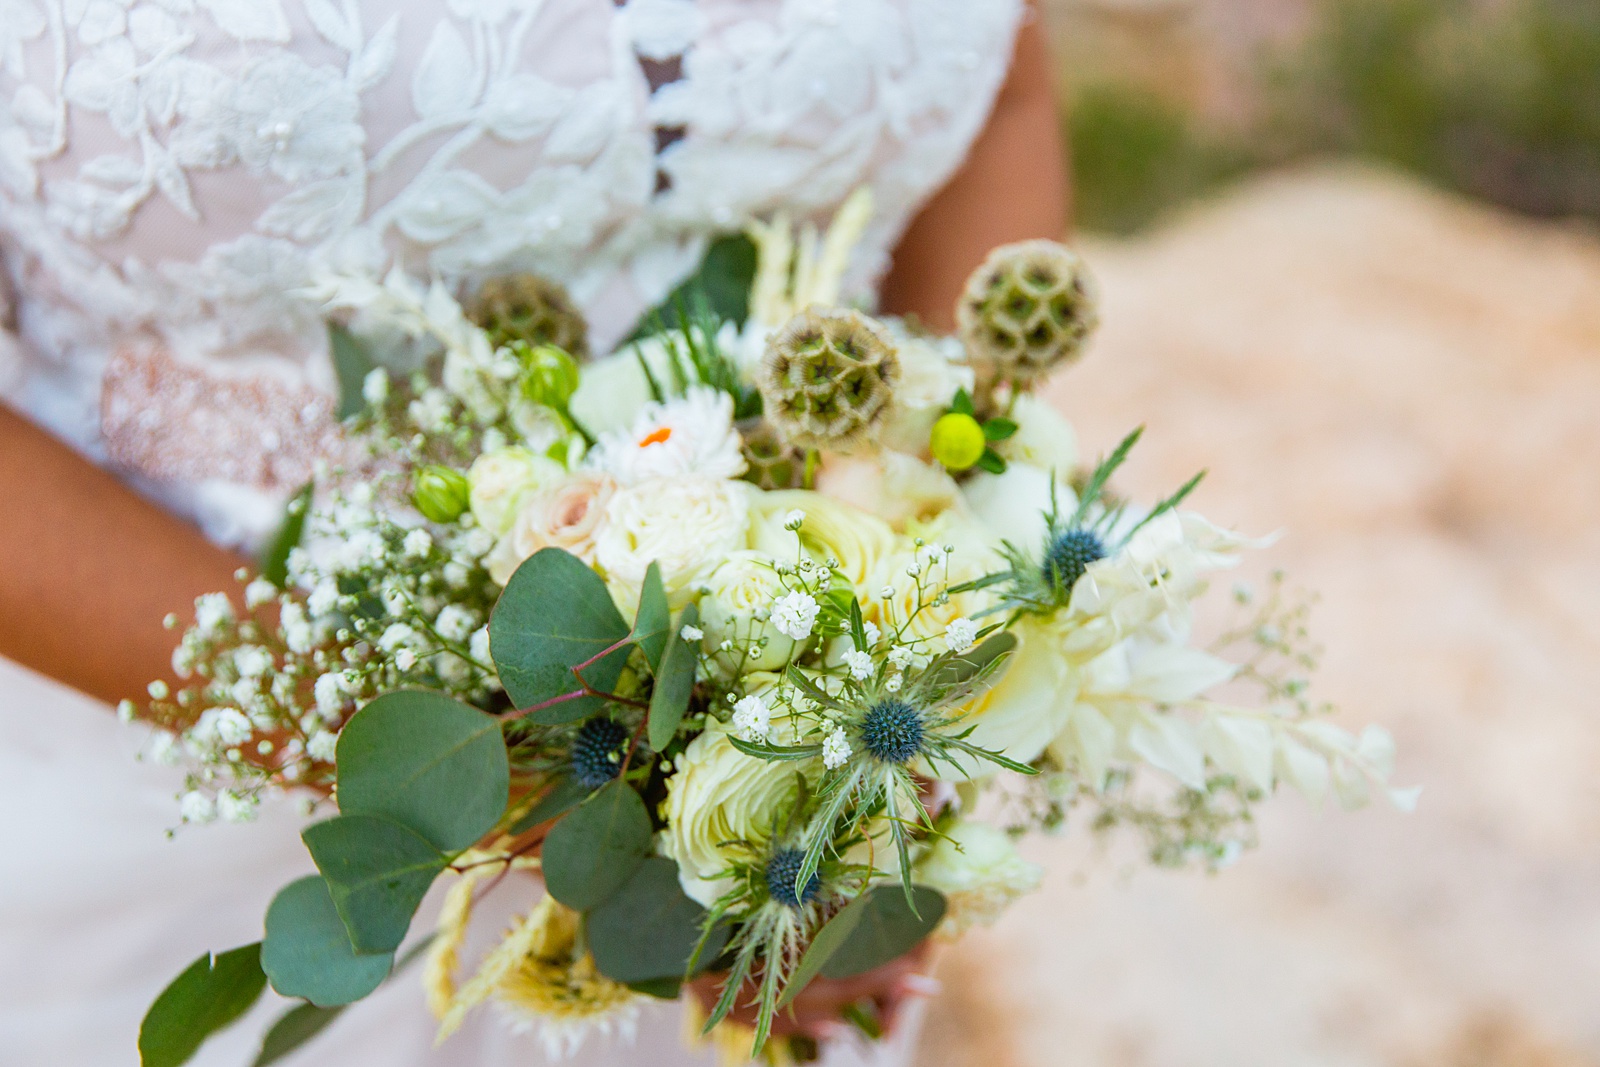 Bride's white neutrals wedding bouquet by PMA Photography.